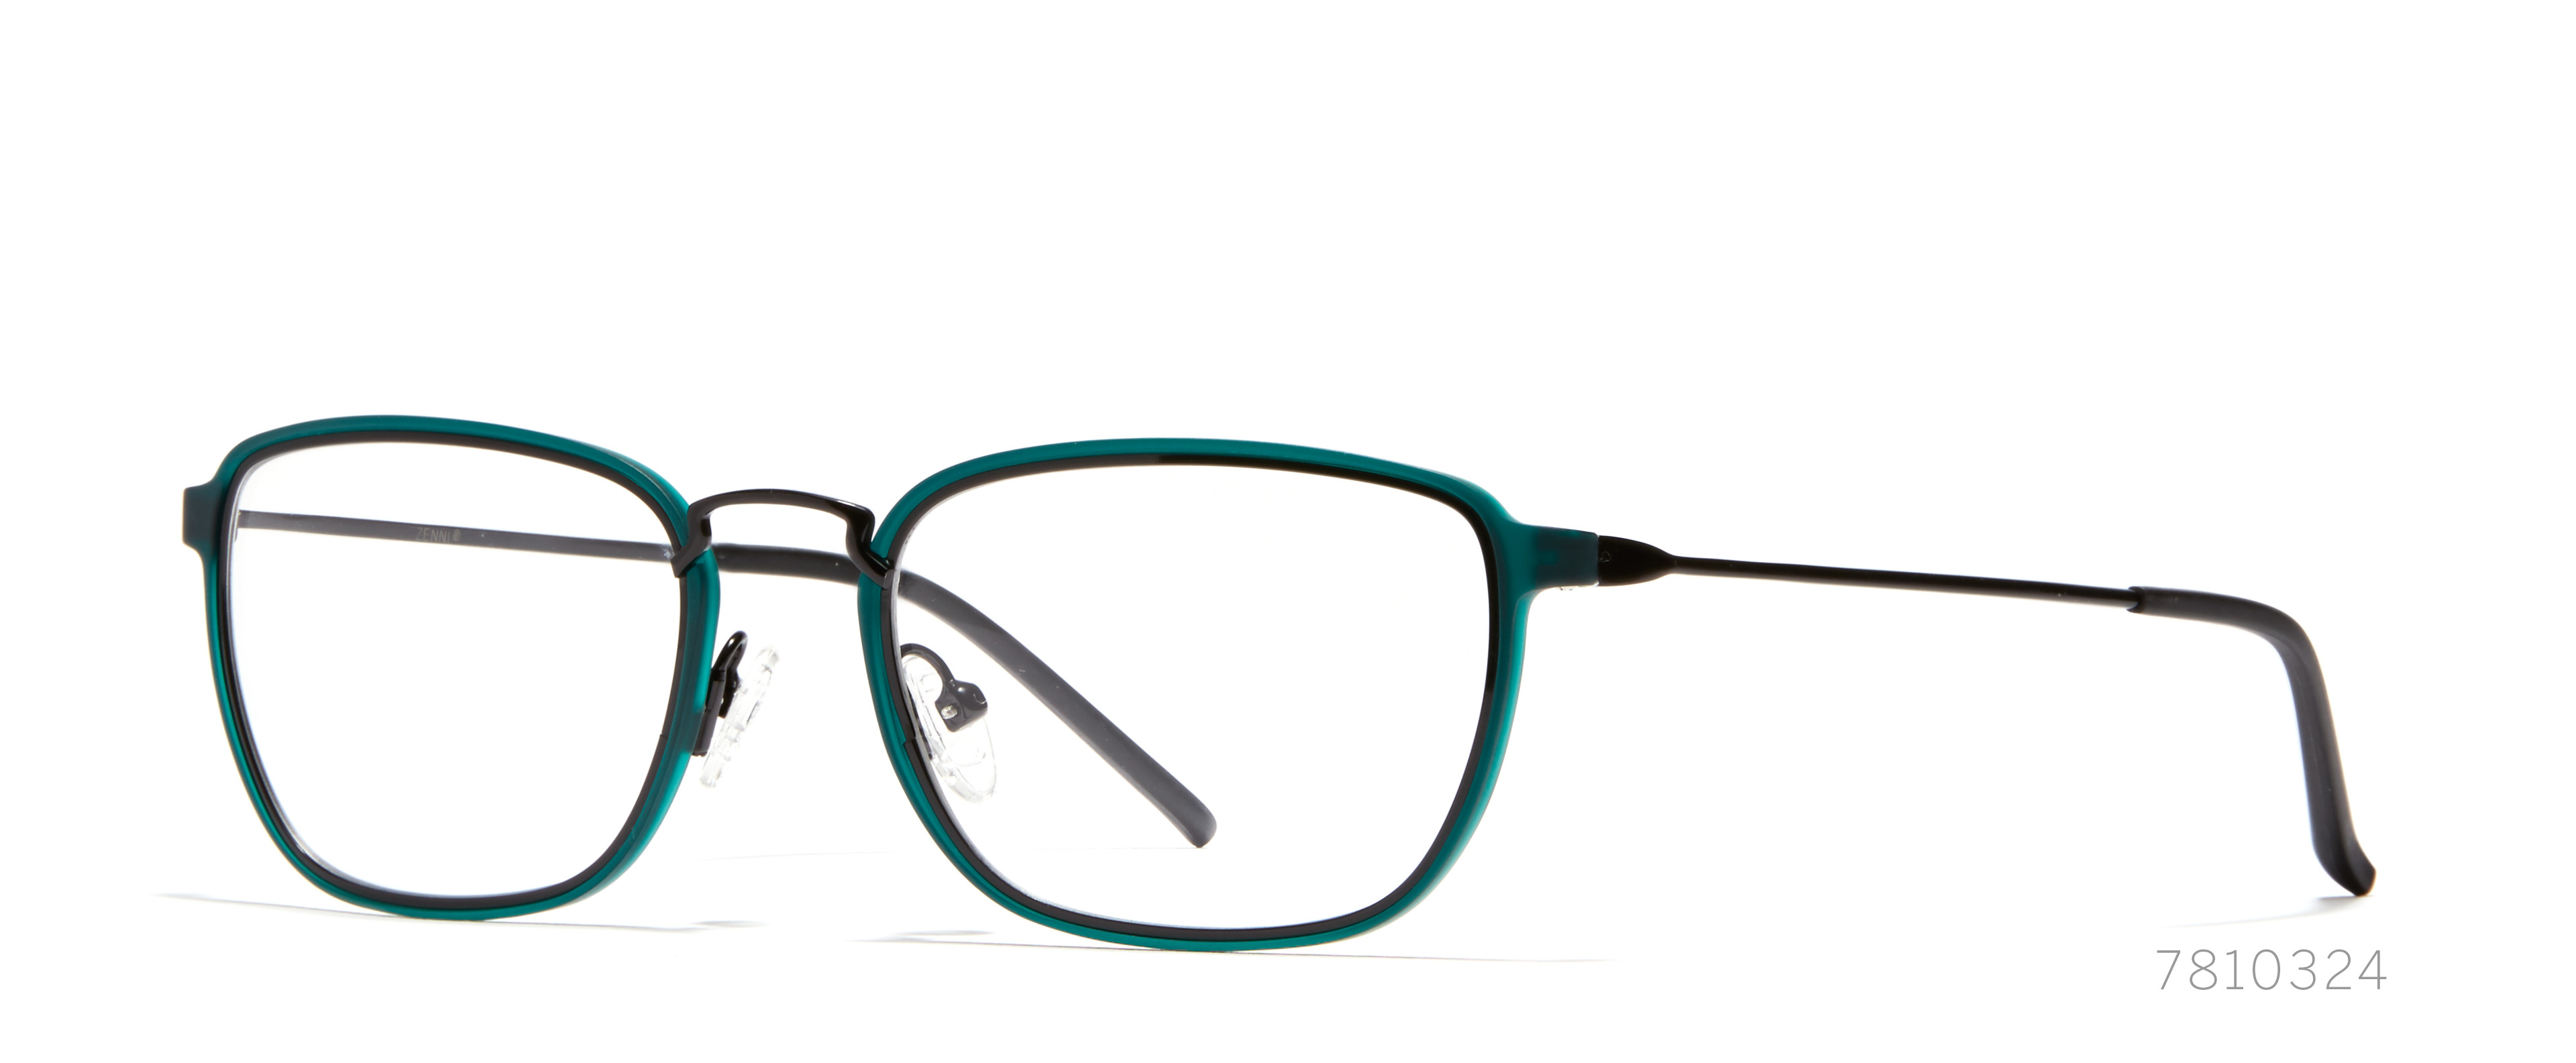 Best Eyeglass Frames For Oval Face Female | vlr.eng.br